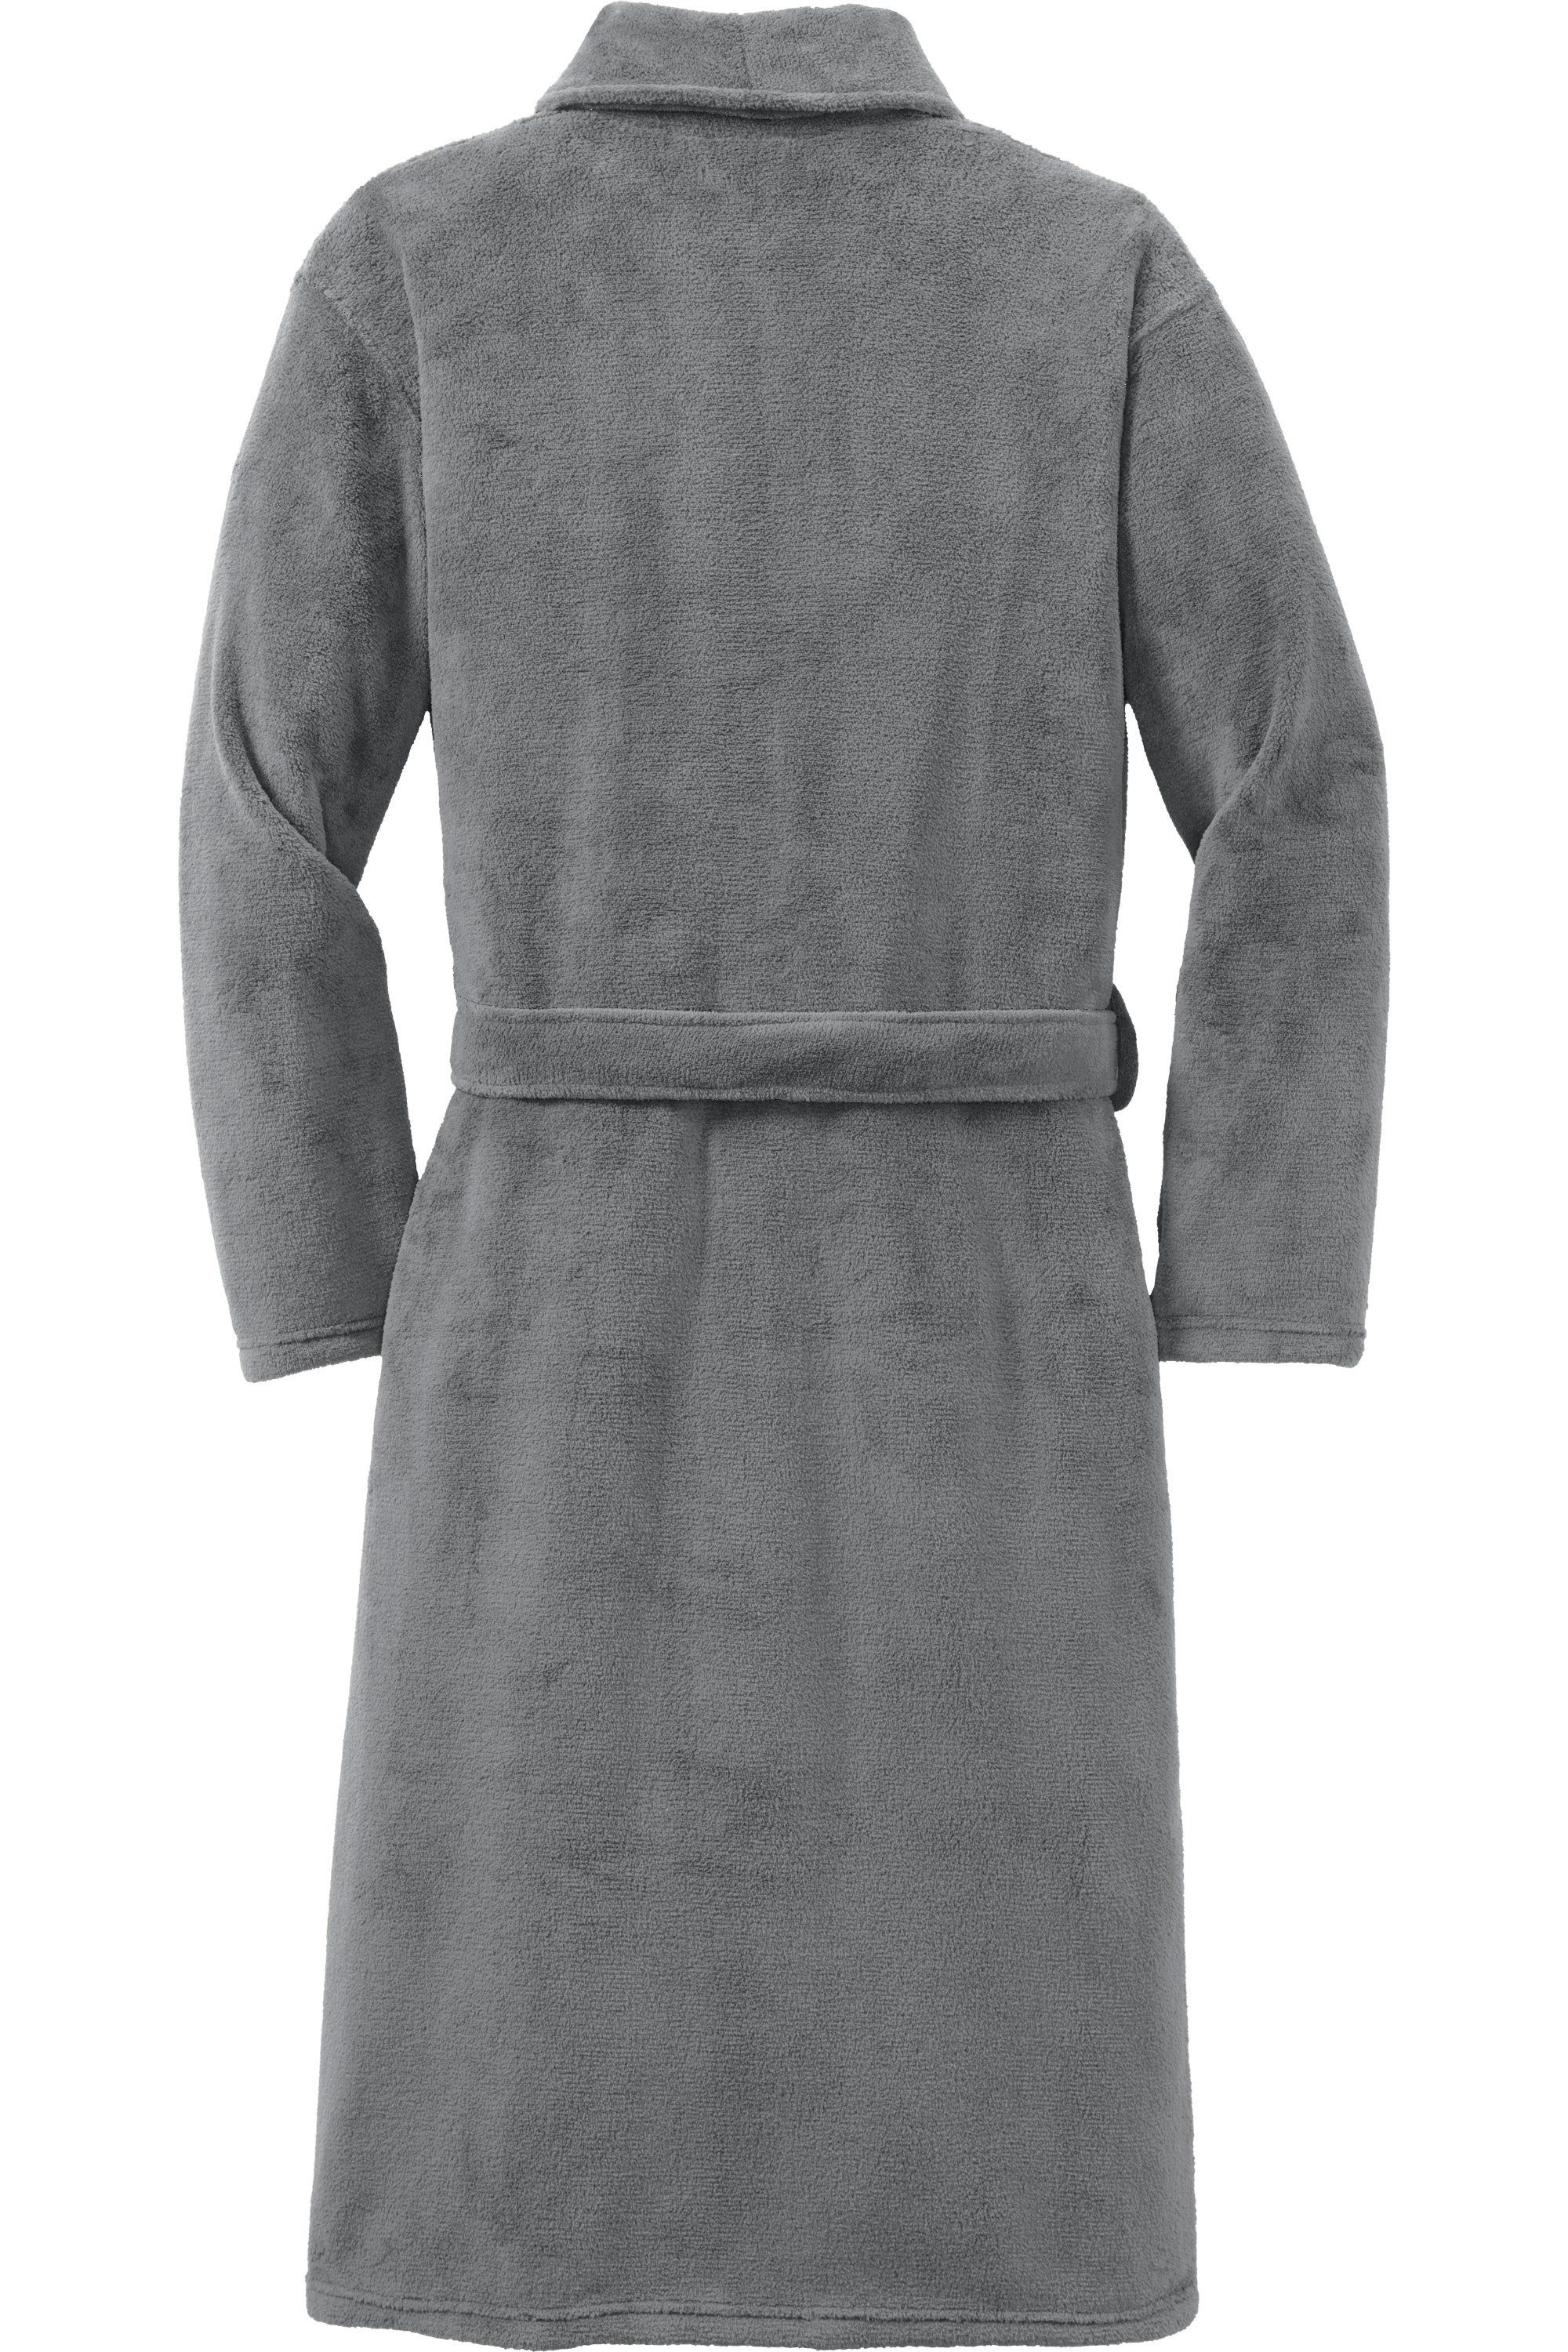 Unisex Personalized Luxury Plush Soft Microfleece Robe